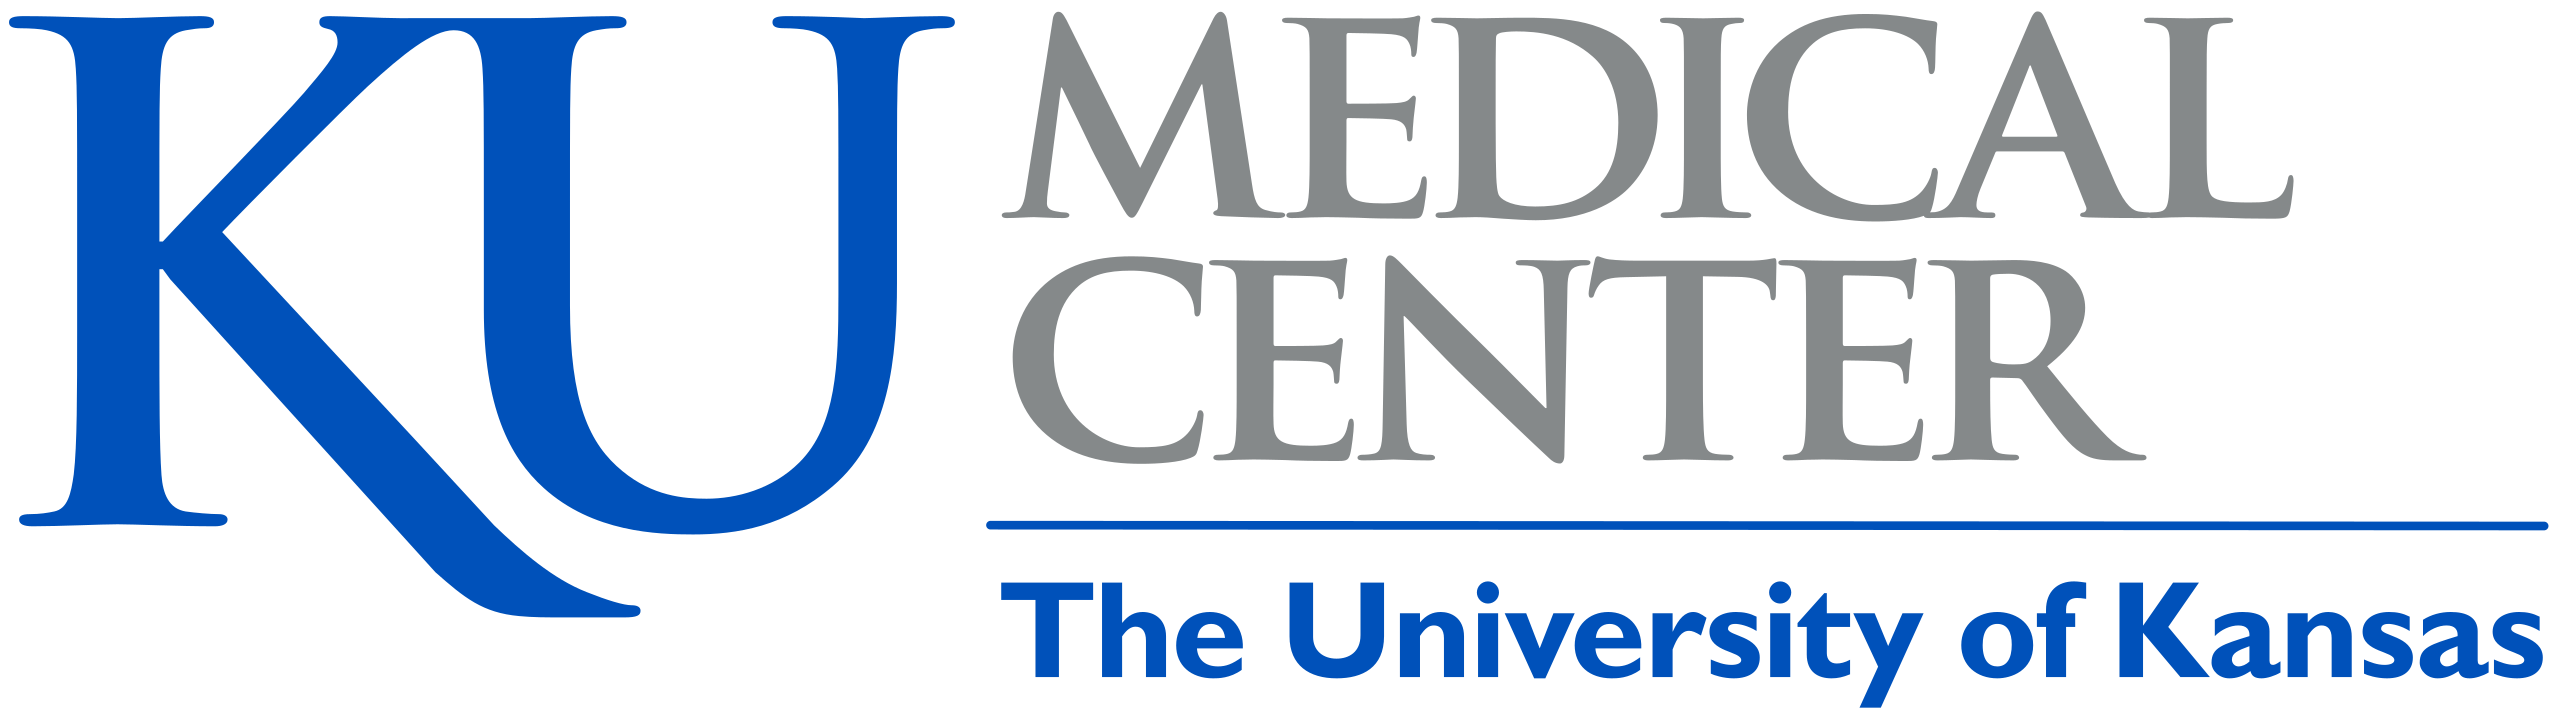 University of Kansas Medical Center Logo